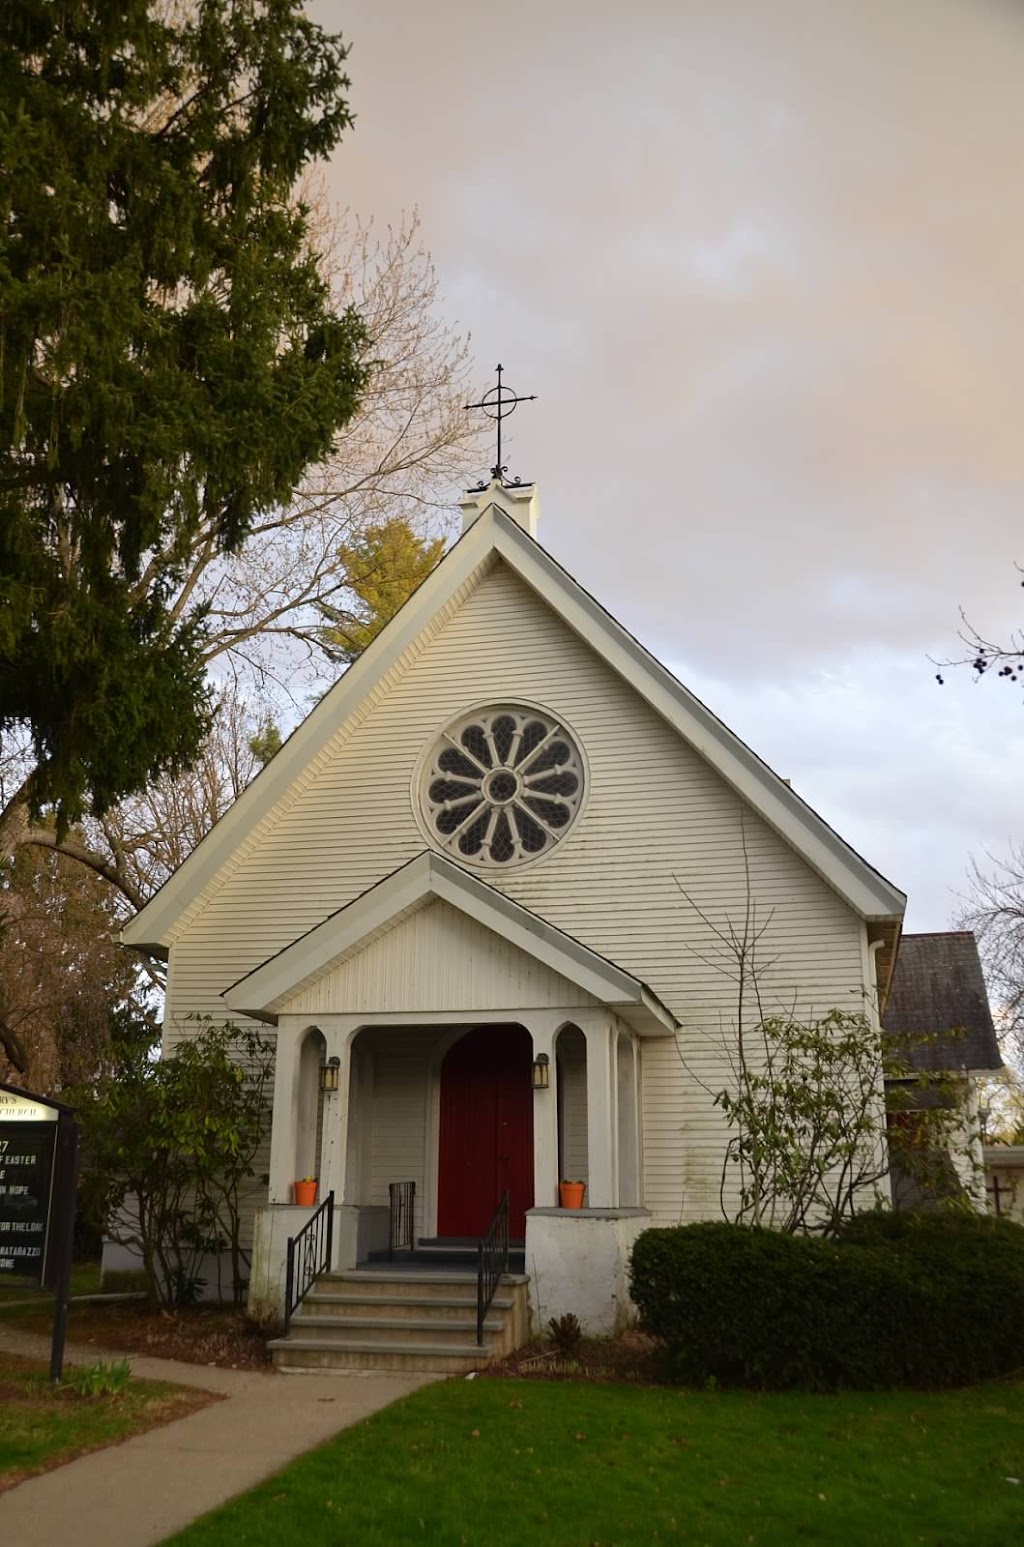 Episcopal Church of St. Luke and St. Mary/Belvidere | 408 3rd St, Belvidere, NJ 07823 | Phone: (908) 818-9661